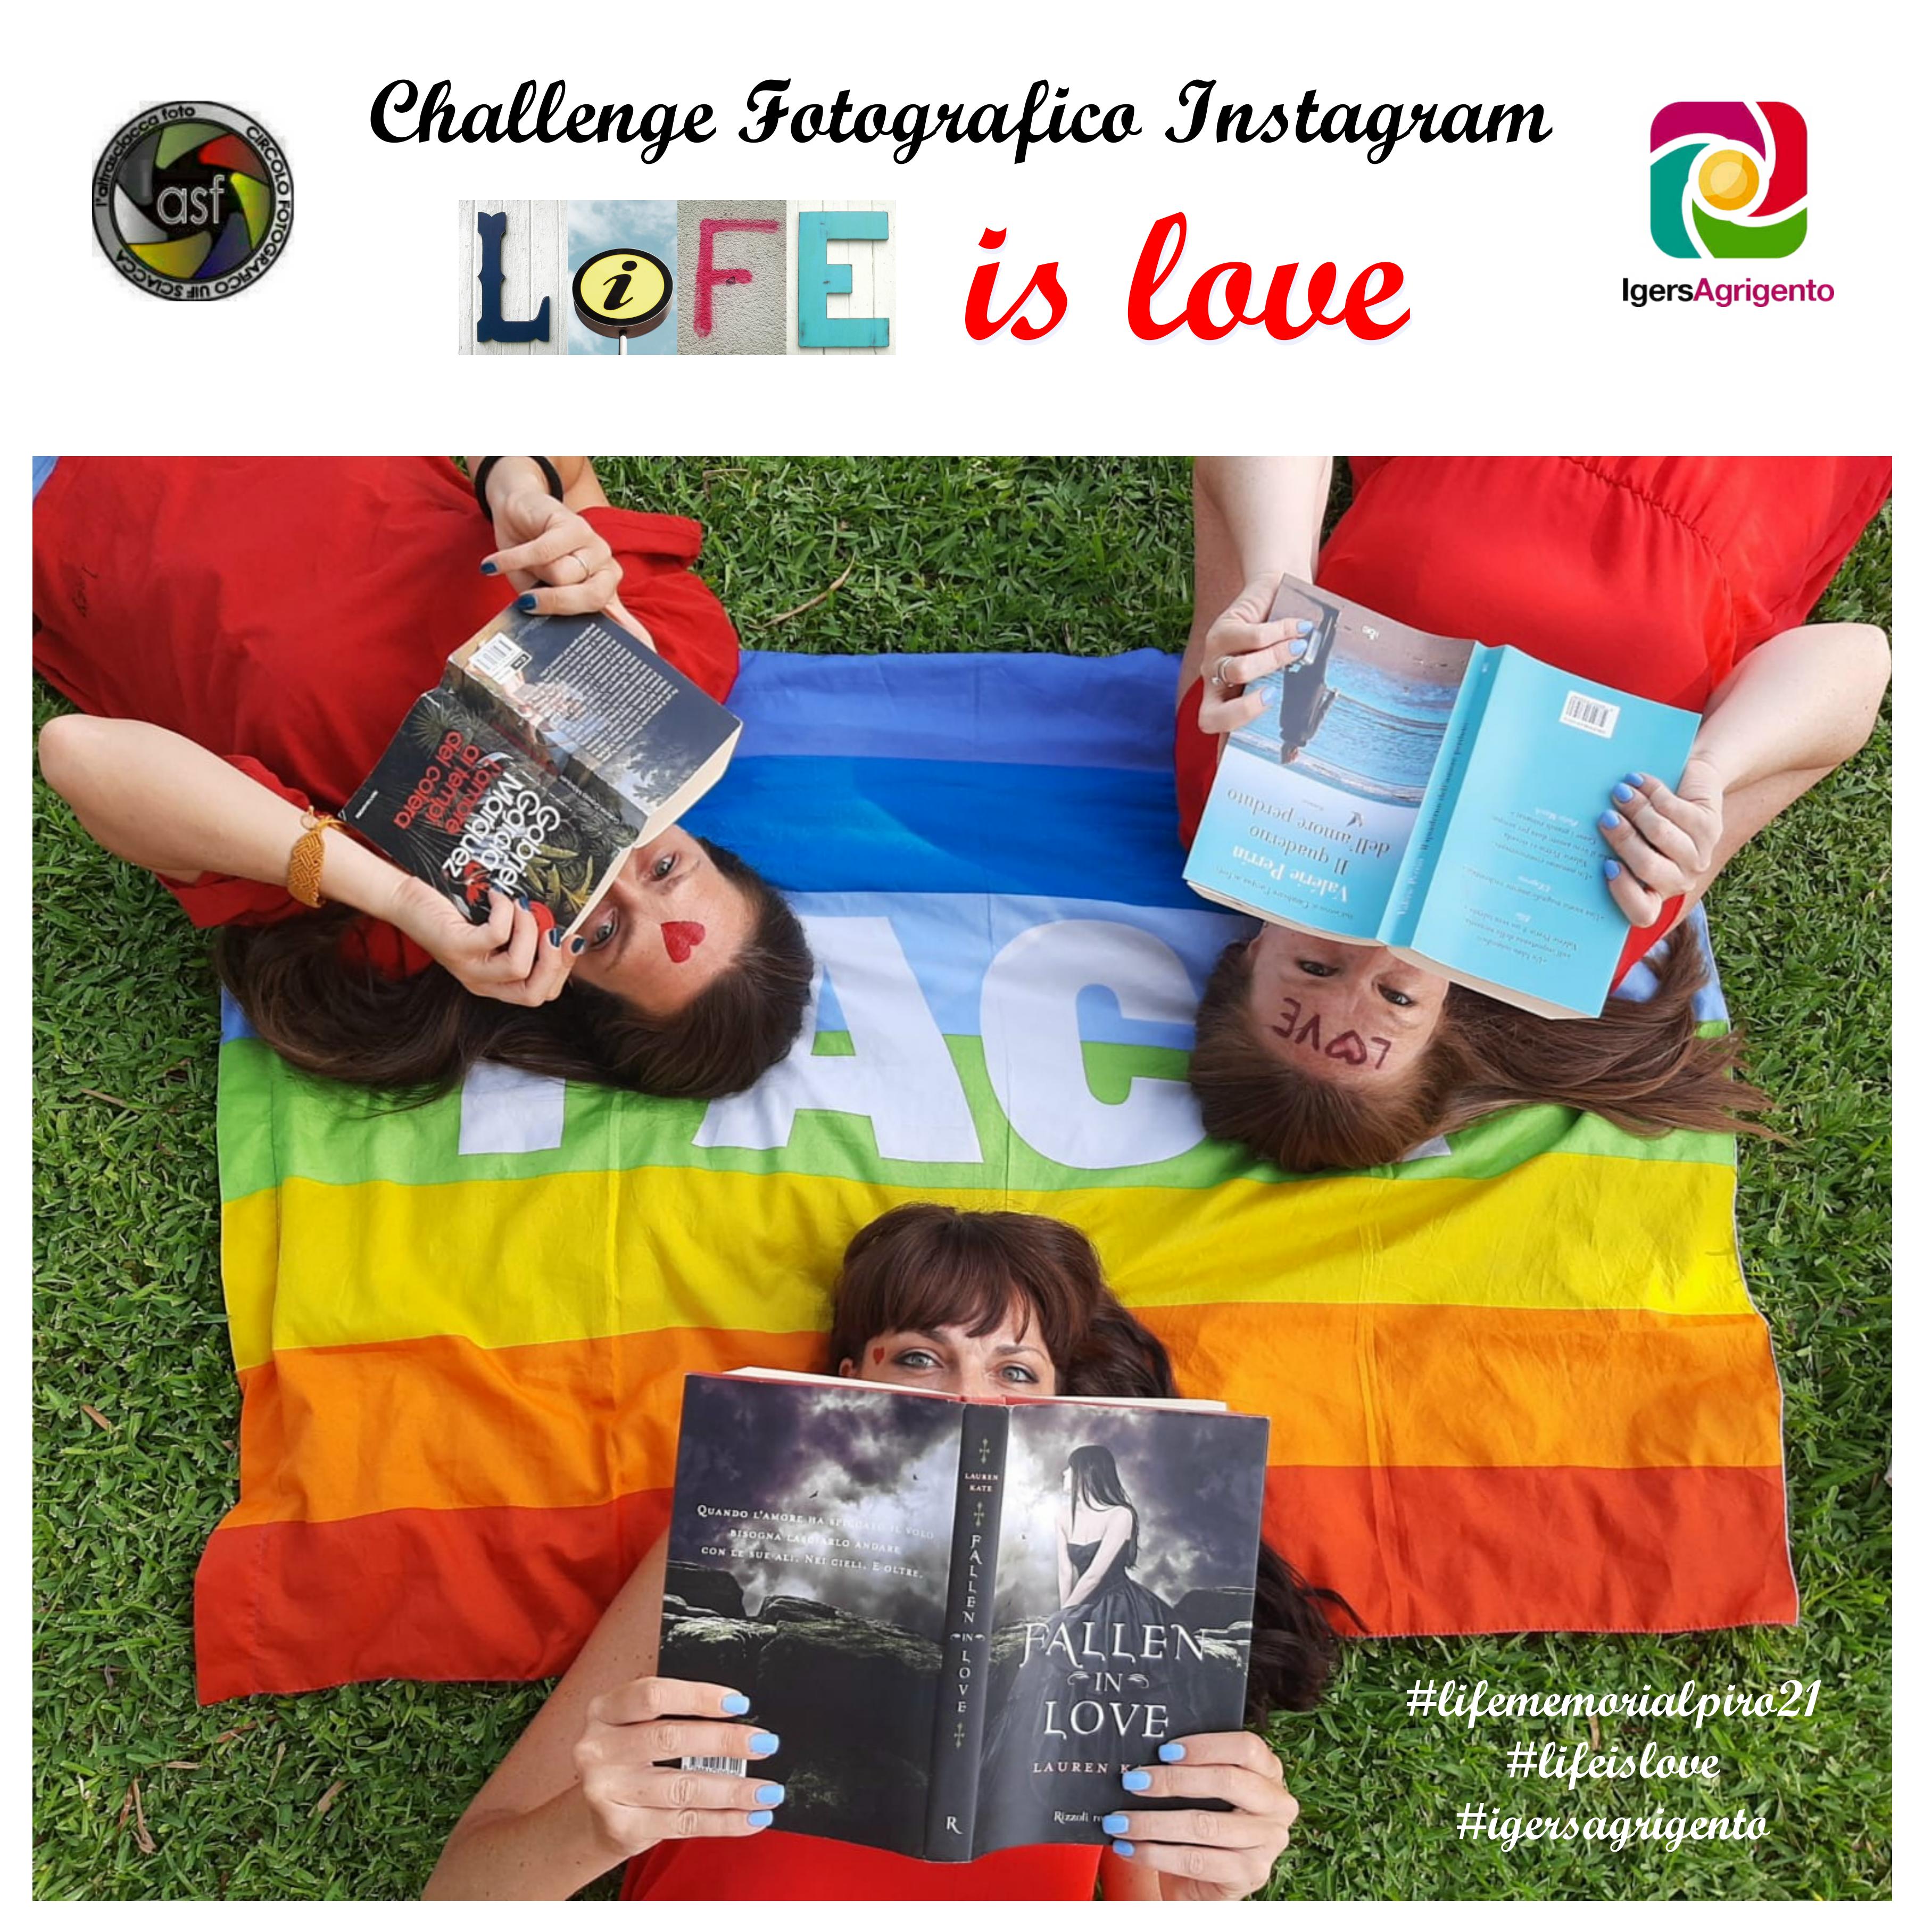 Challenge Fotografico Instagram “LIFE is love”